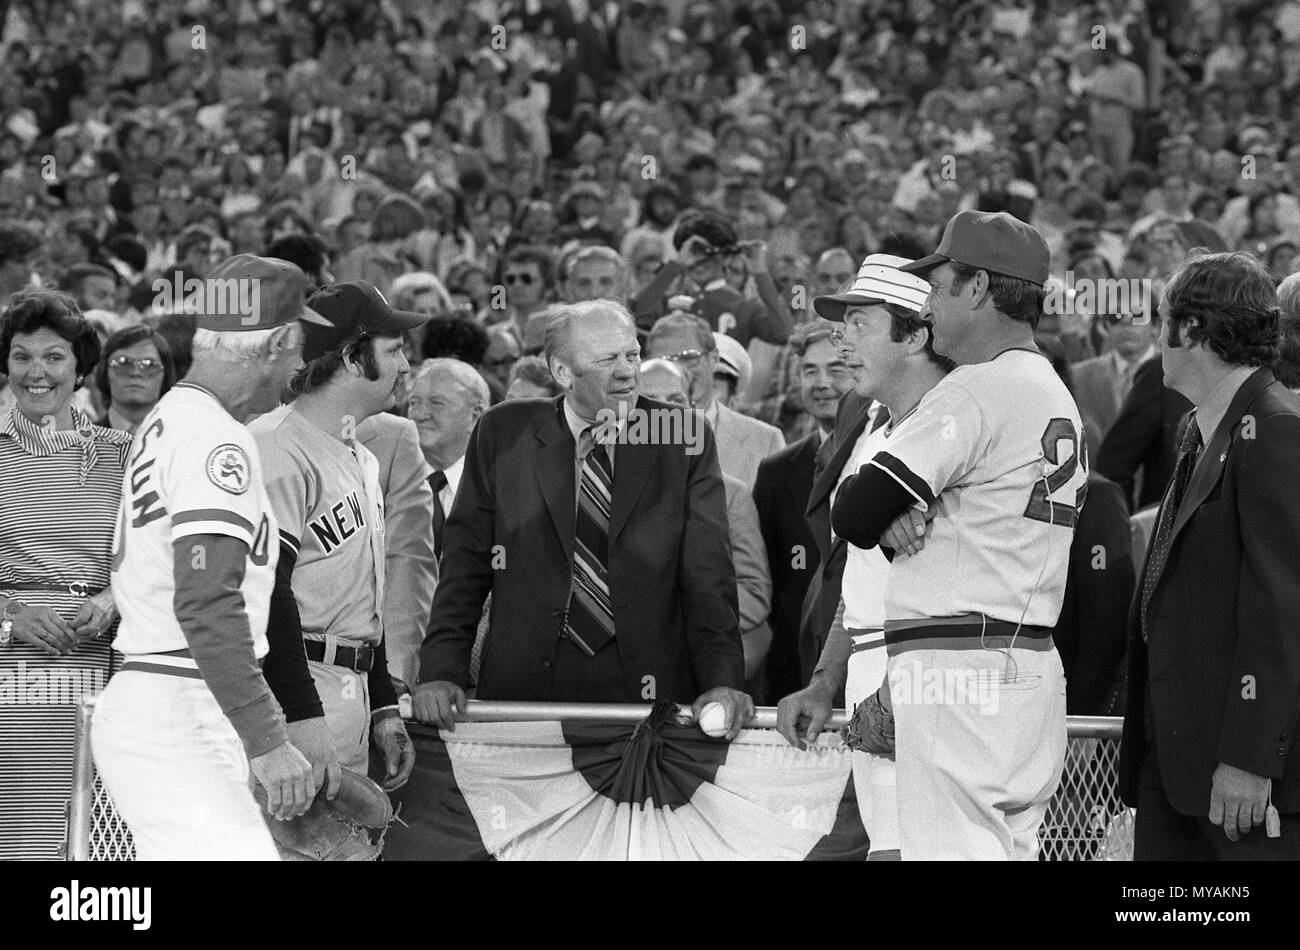 1976, luglio 13 - Veterans Memorial Stadium - Philadelphia, PA - Gerald Ford, Darrell Johnson; George 'Sparky' Anderson, Thurman Munson Johnny banco - Prima di Major League Baseball All-Star Game Foto Stock